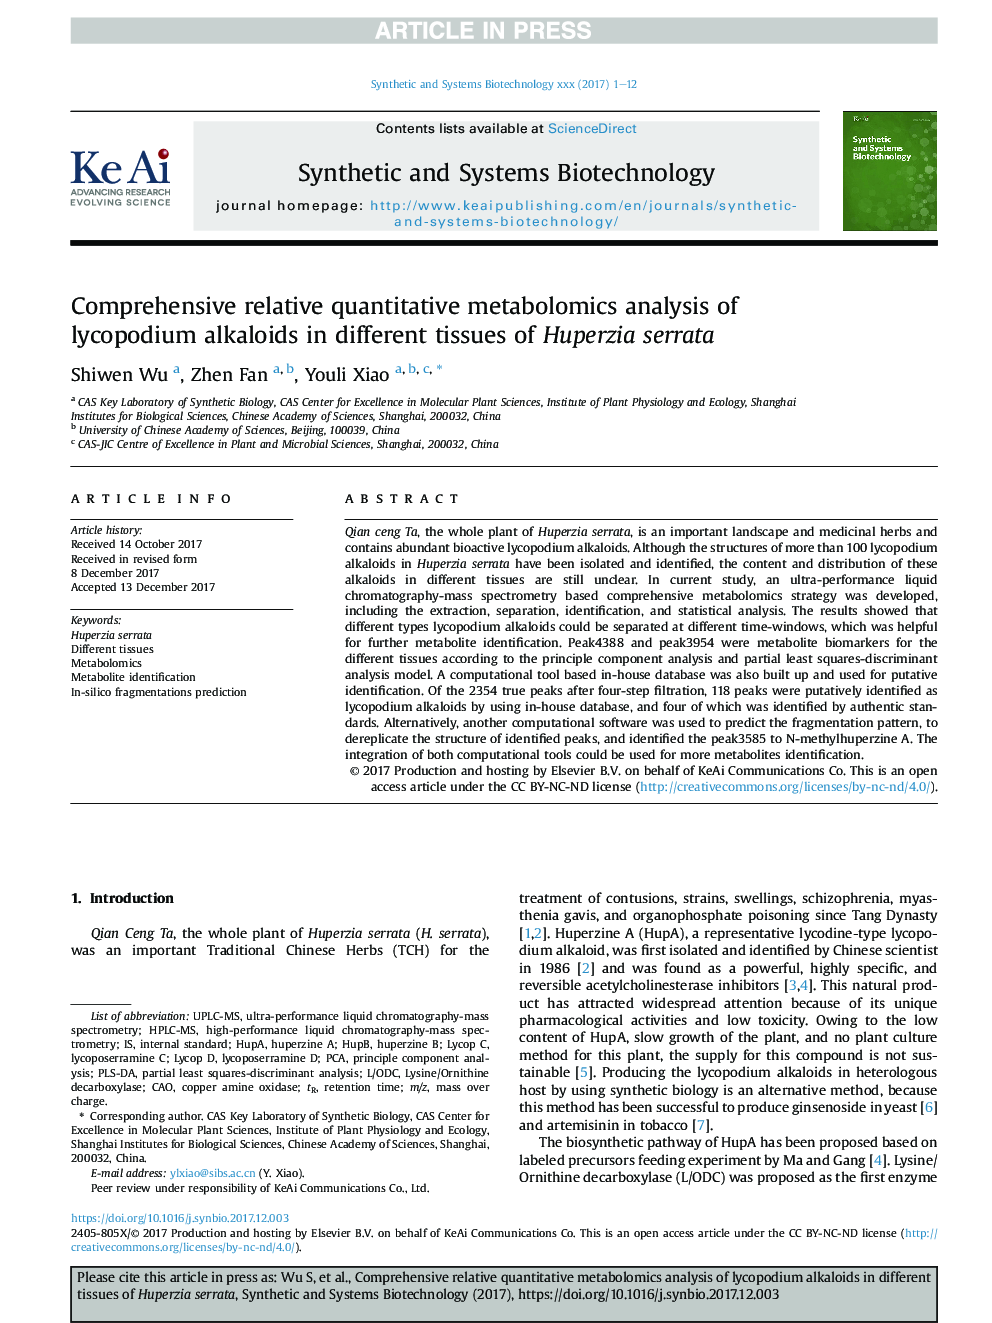 Comprehensive relative quantitative metabolomics analysis of lycopodium alkaloids in different tissues of Huperzia serrata